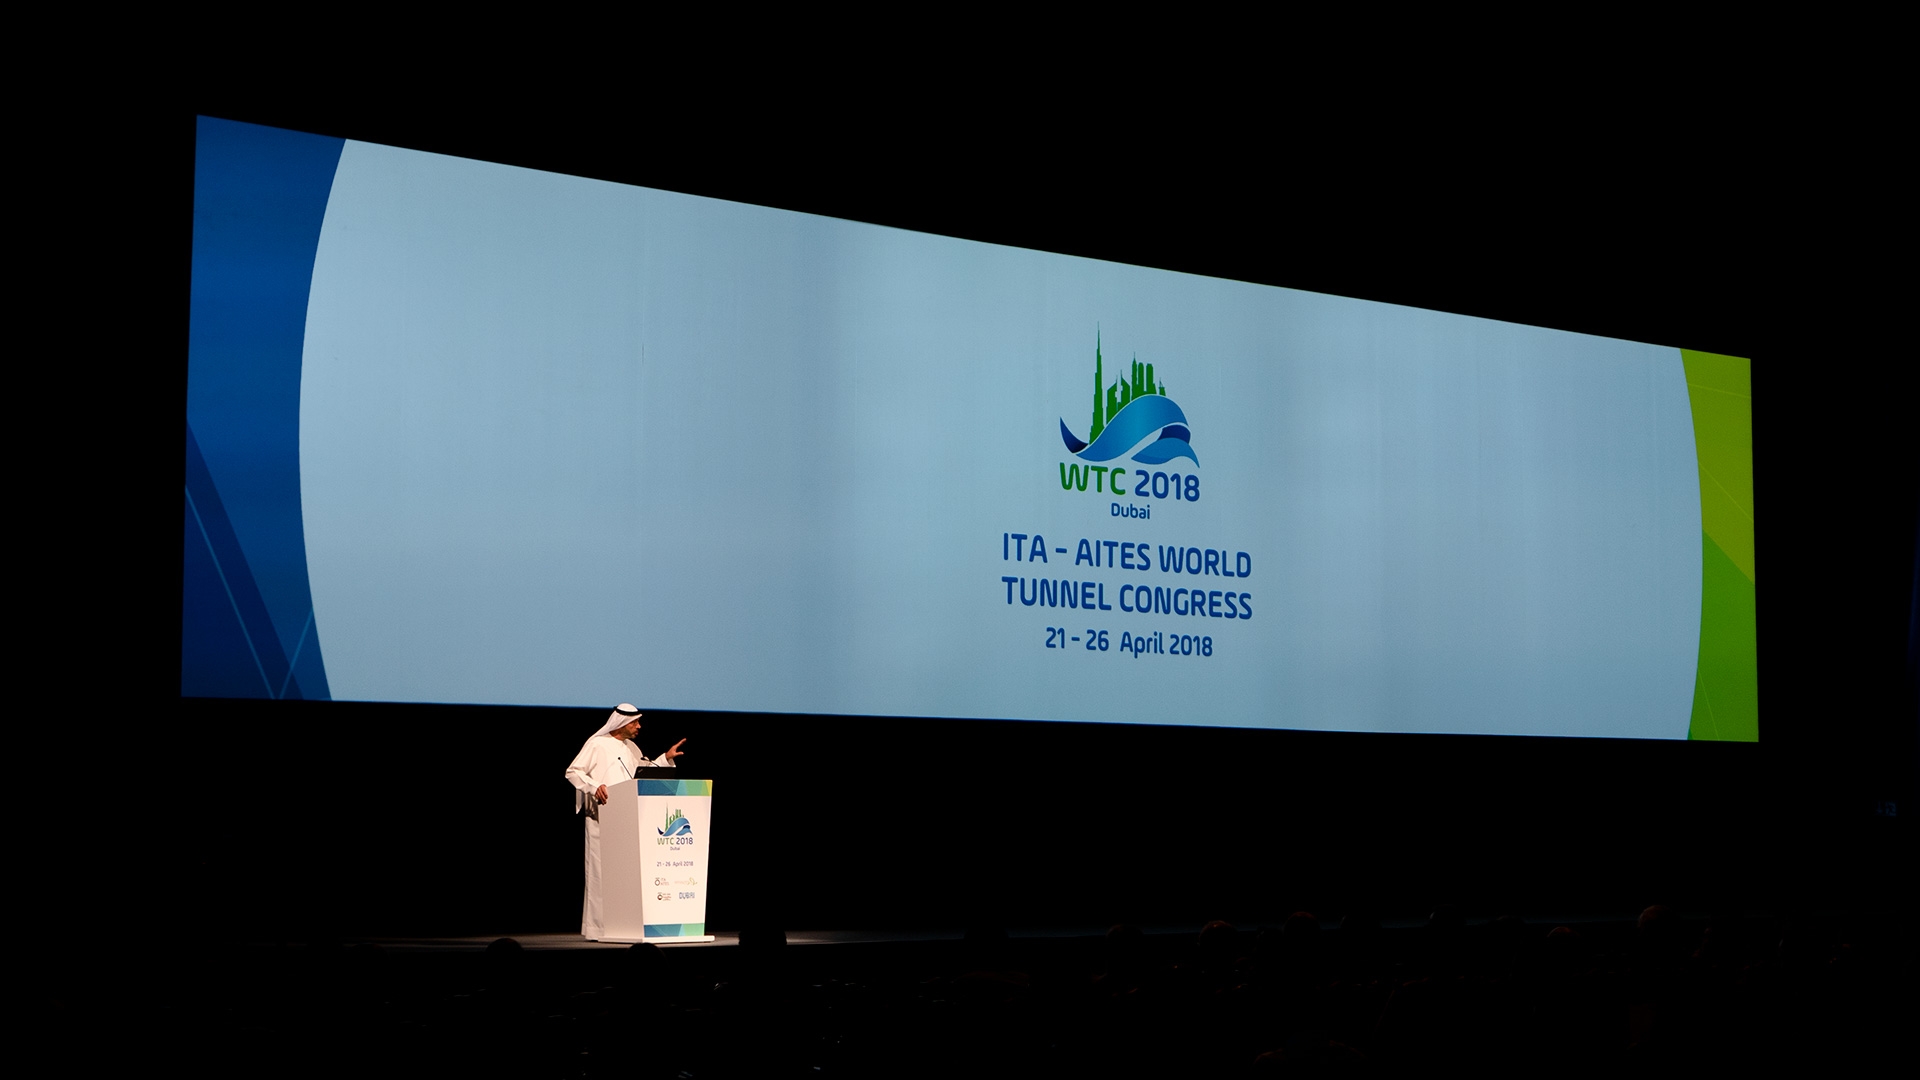 New strategies for ITA presented in Dubai